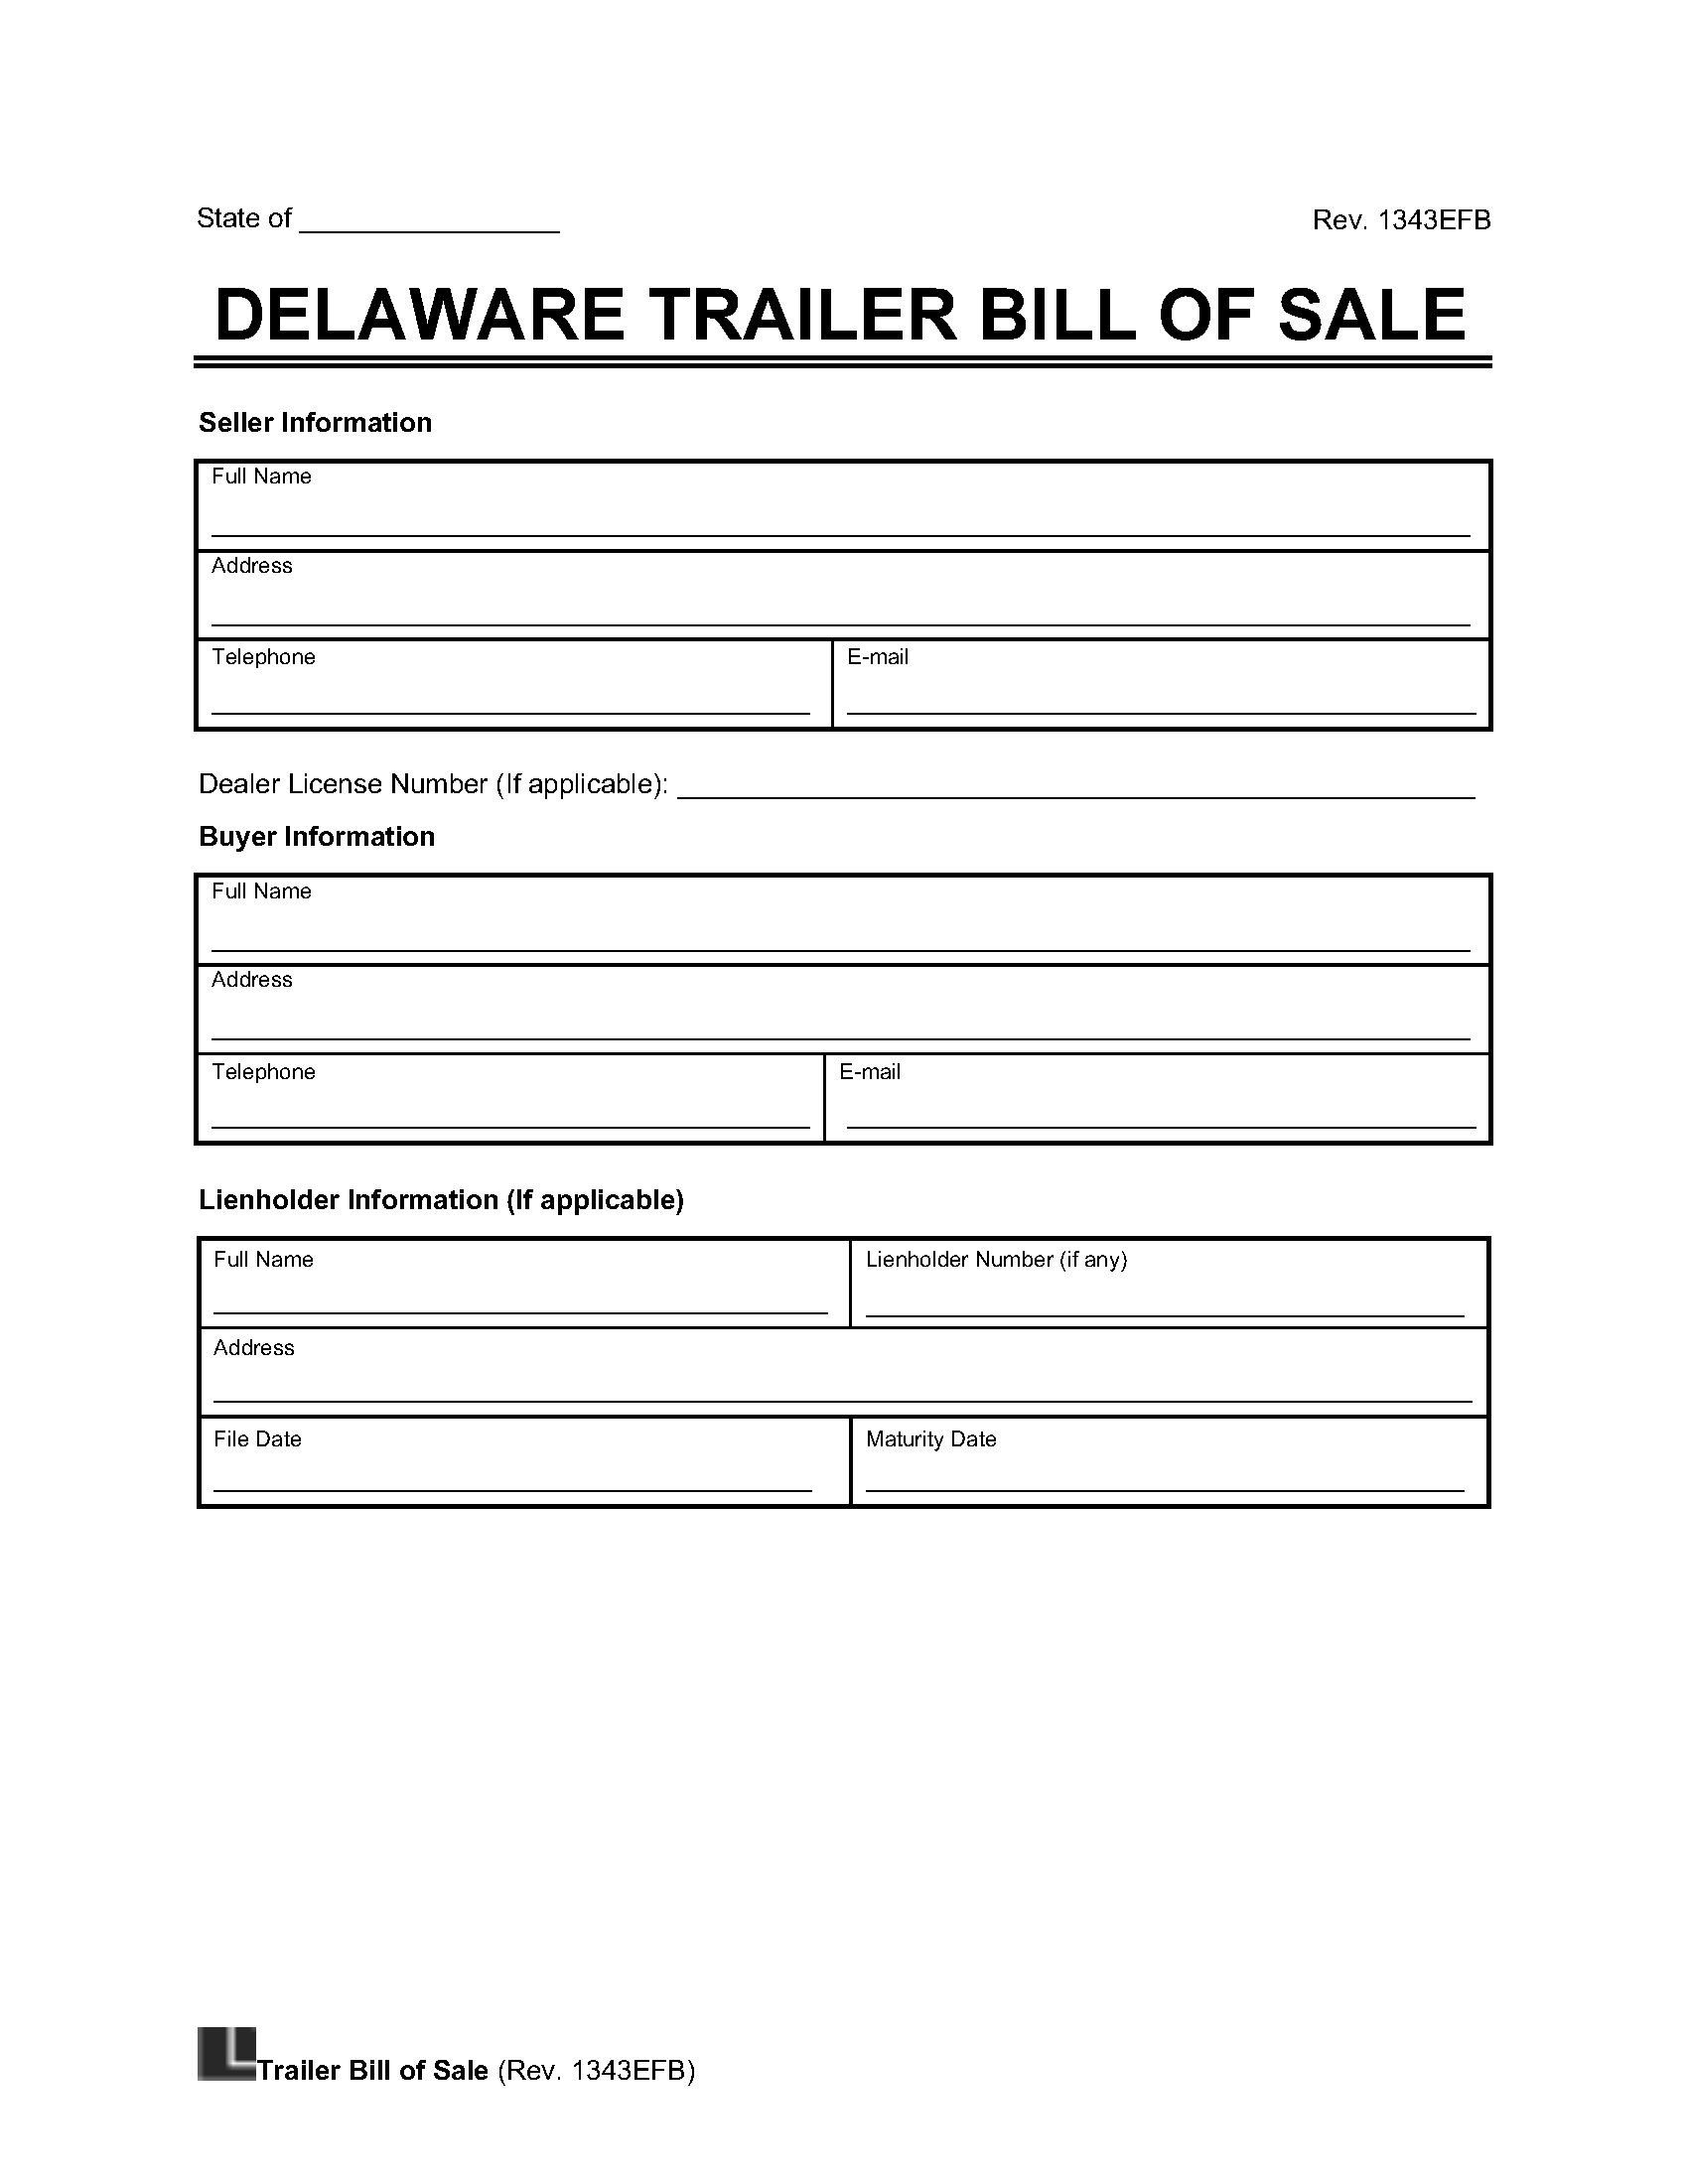 Delaware Trailer Bill of Sale screenshot